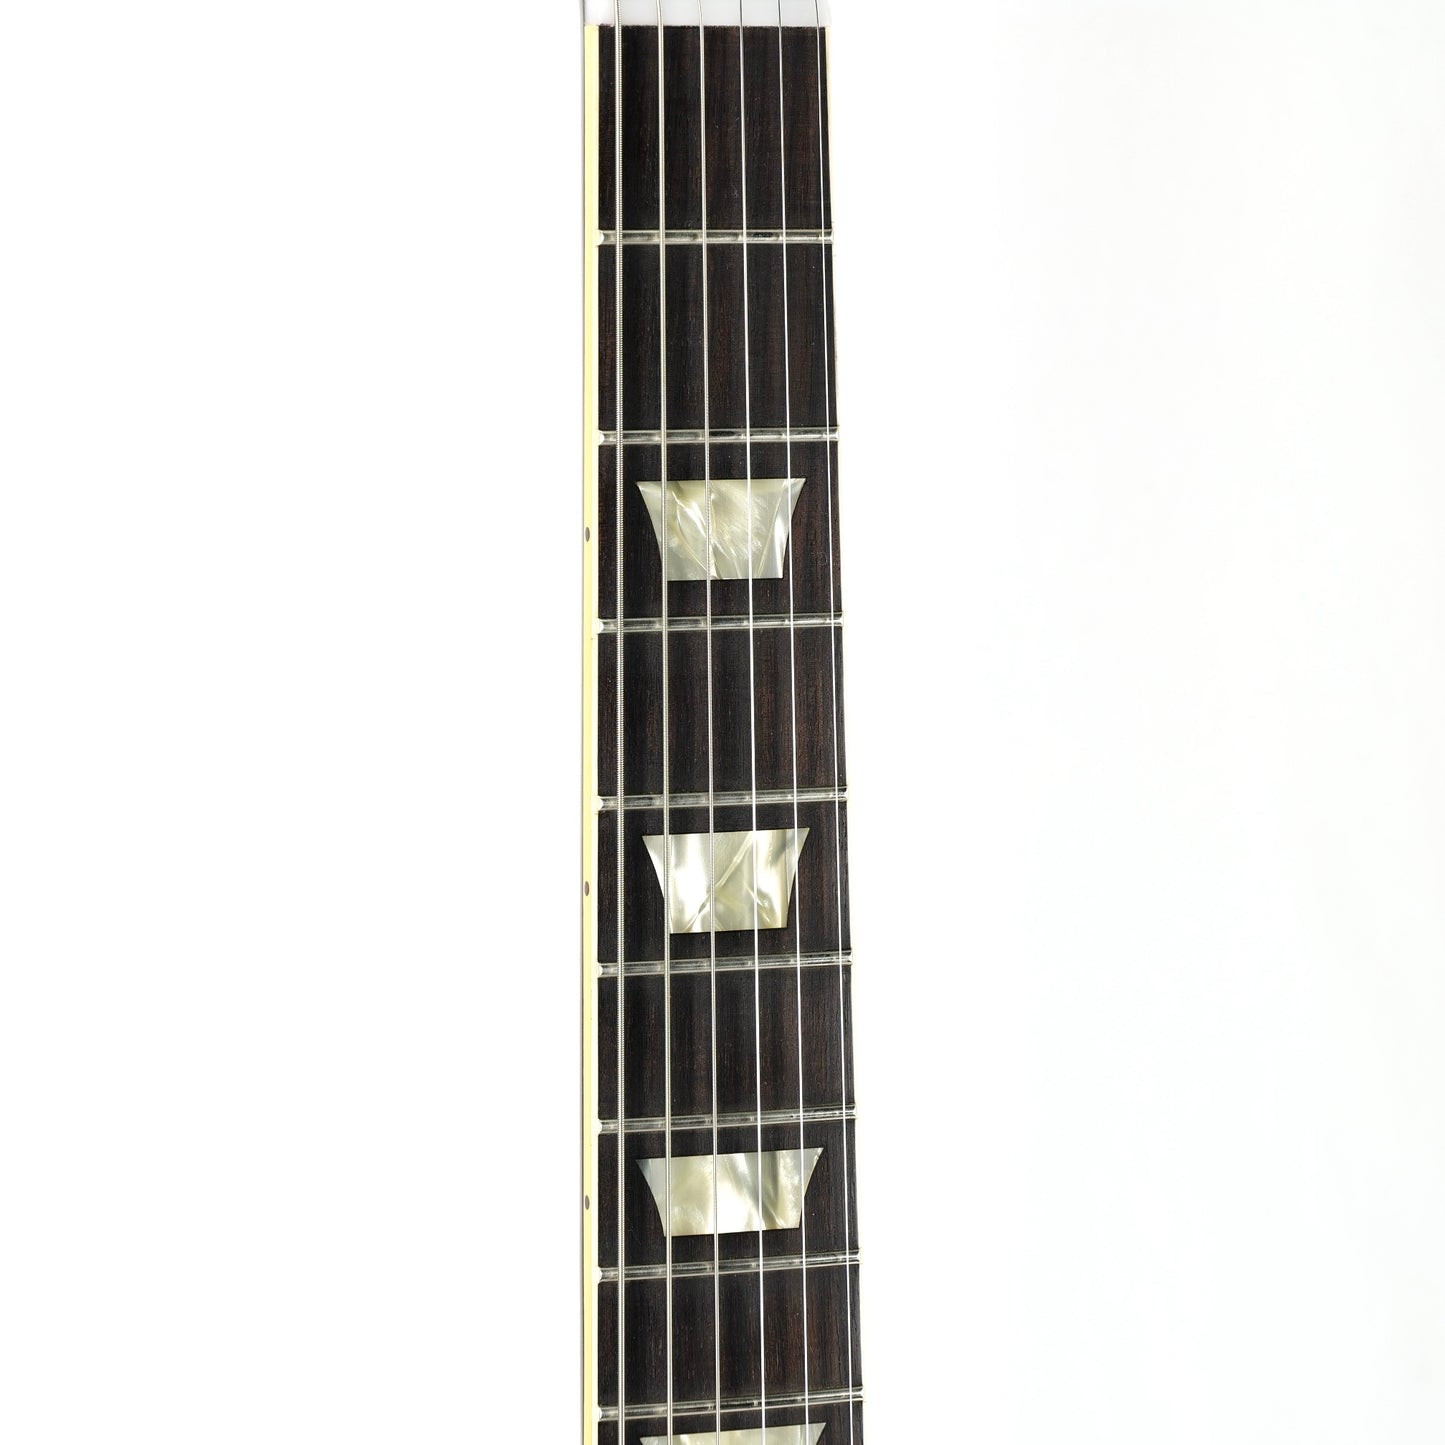 2023 Gibson M2M '54 Les Paul Standard Reissue - Oxblood VOS